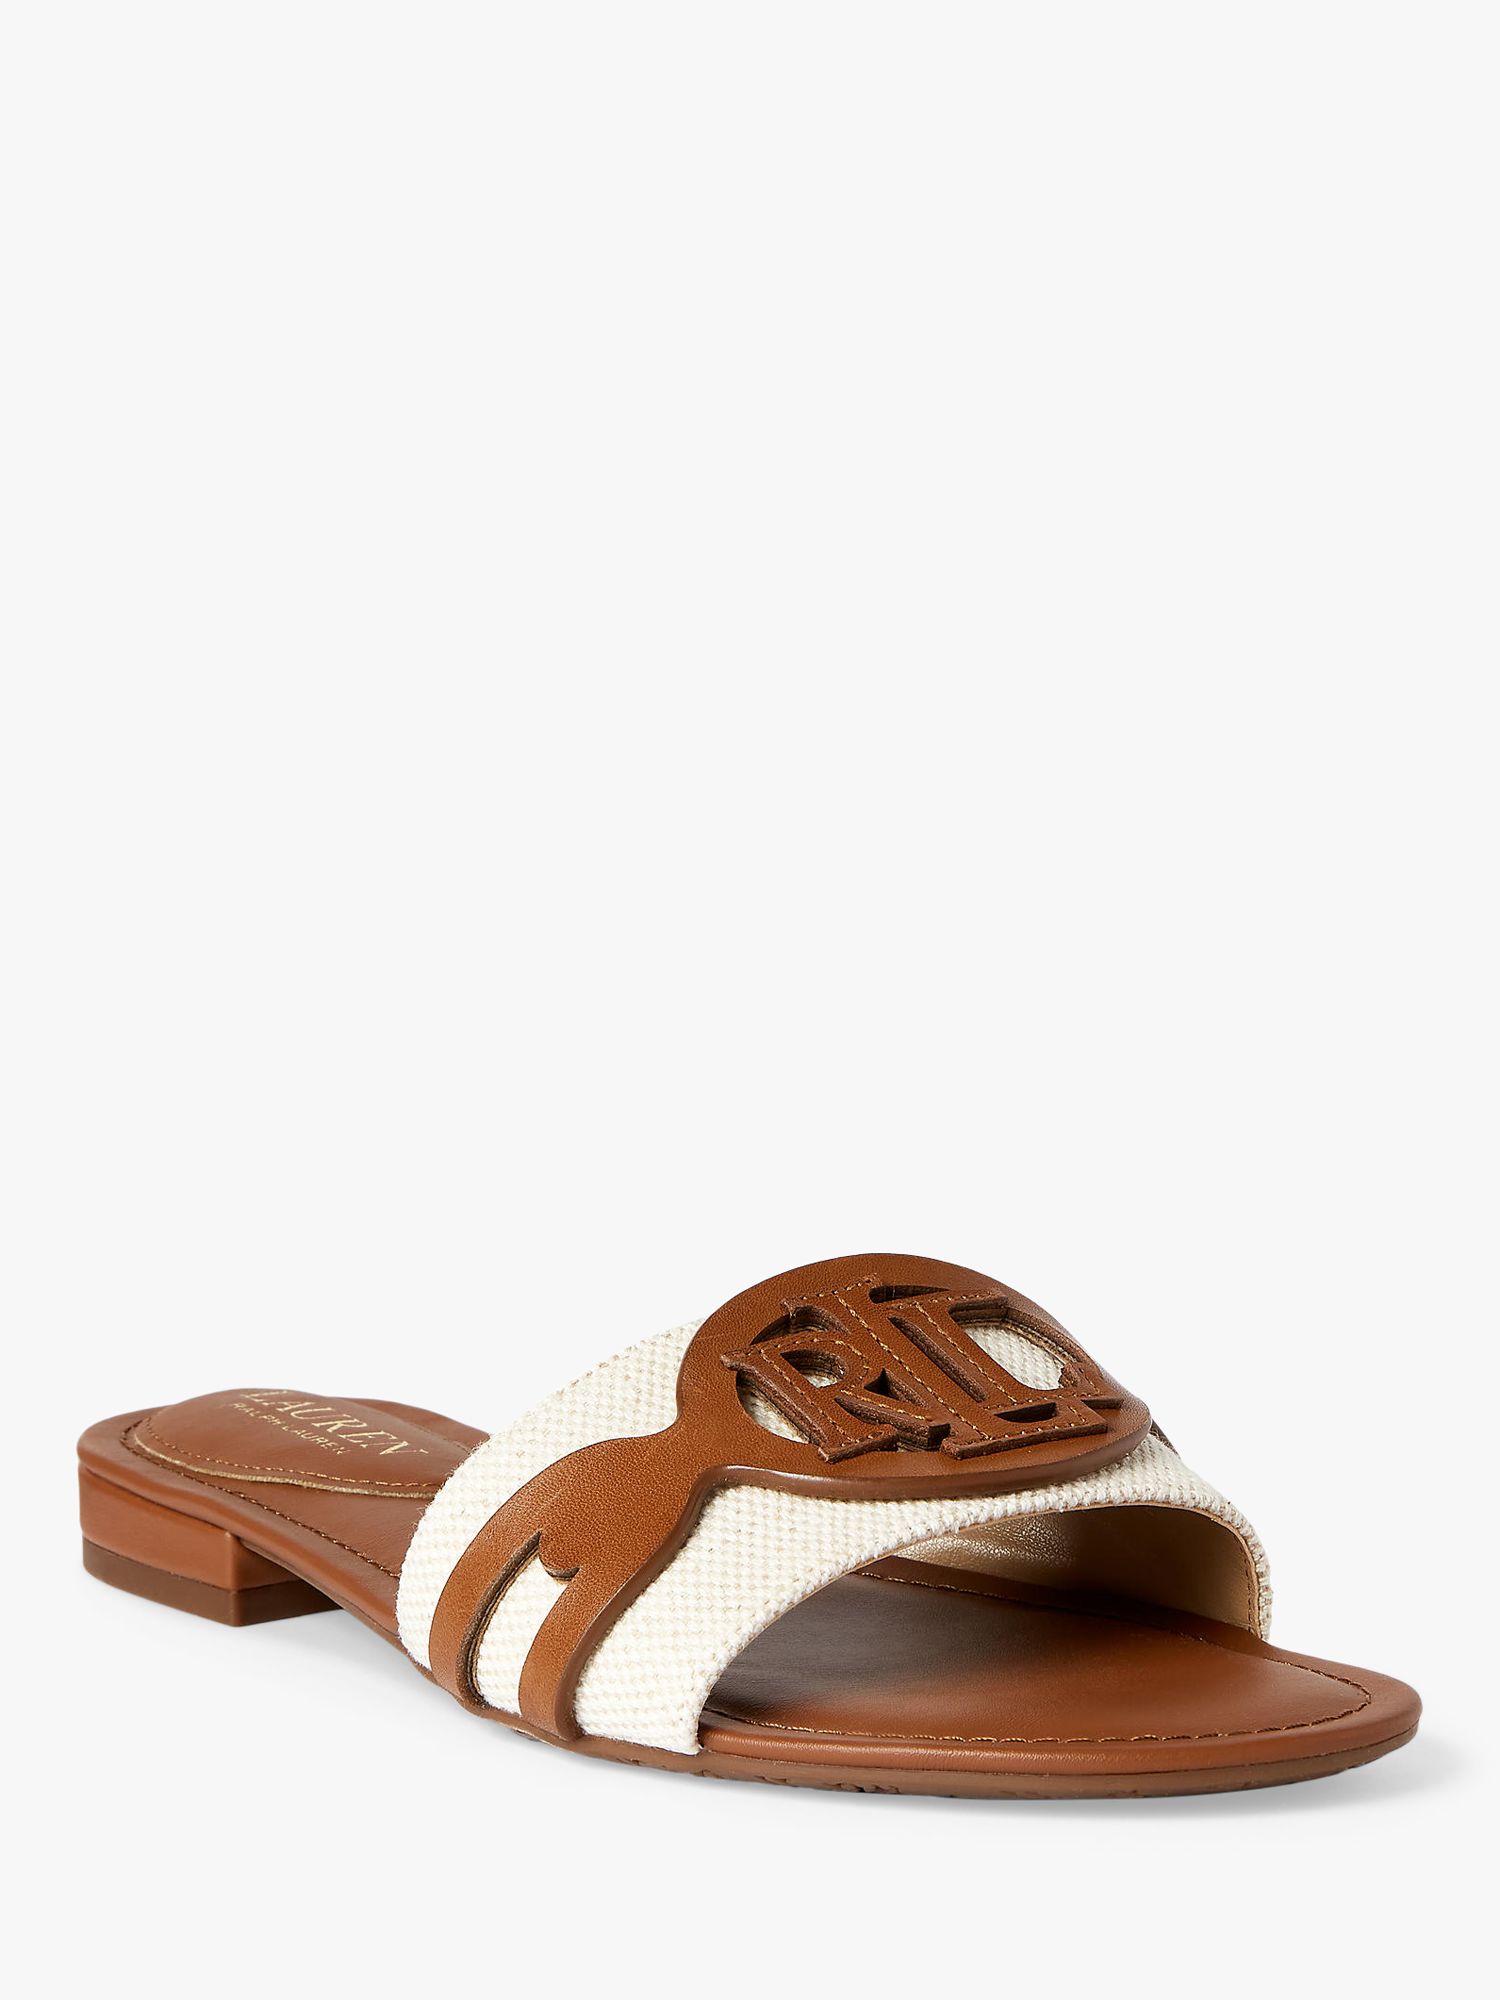 Lauren Ralph Lauren Allegra Slider Sandals, Natural/Tan at John Lewis ...